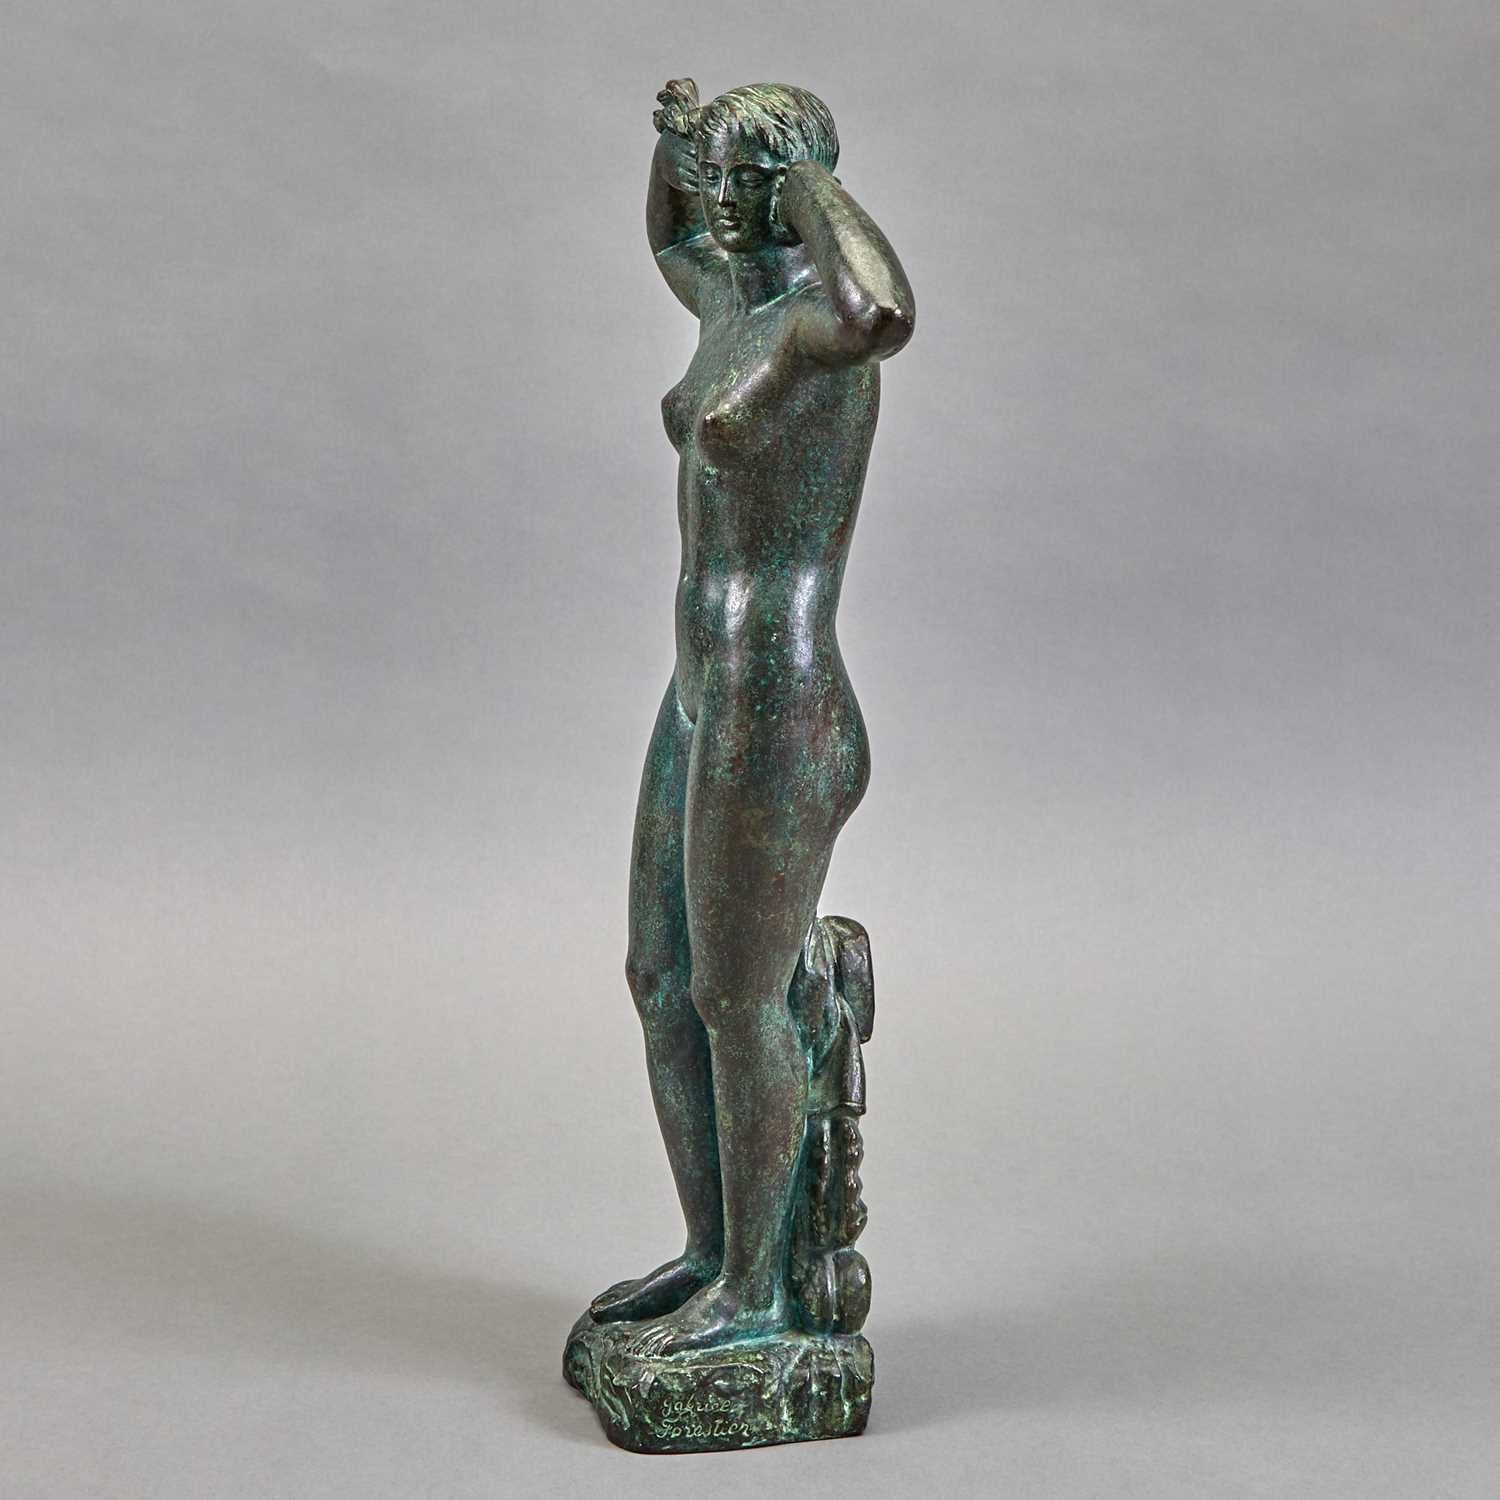 Bronze sculpture in verdigris patina by Gabriel Forestier (1889-1969), representing 